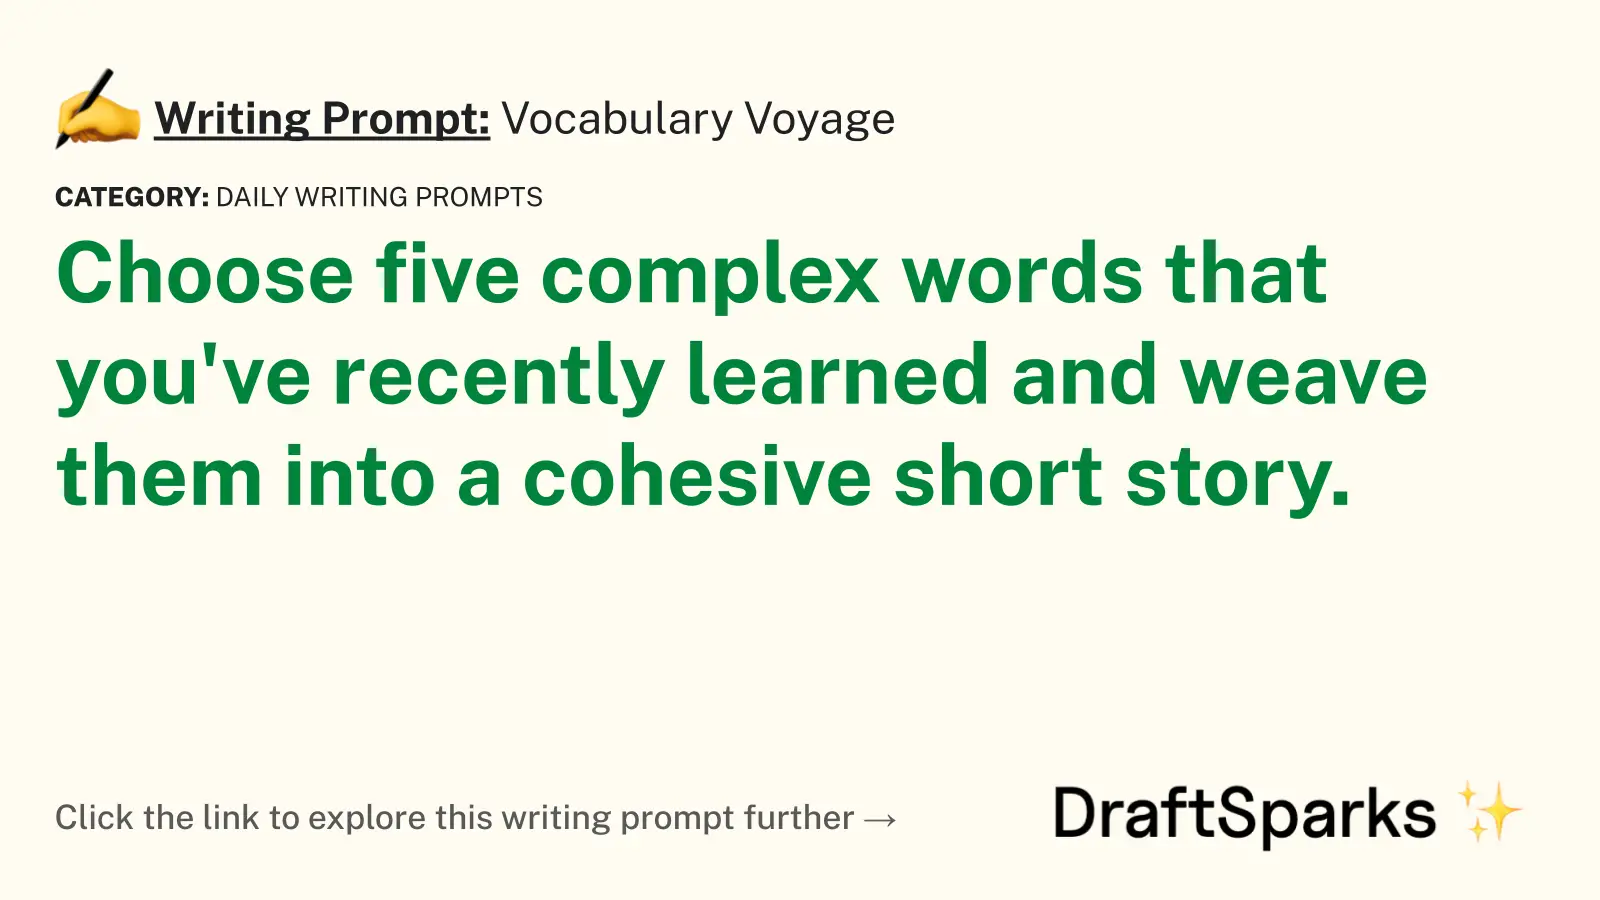 Vocabulary Voyage